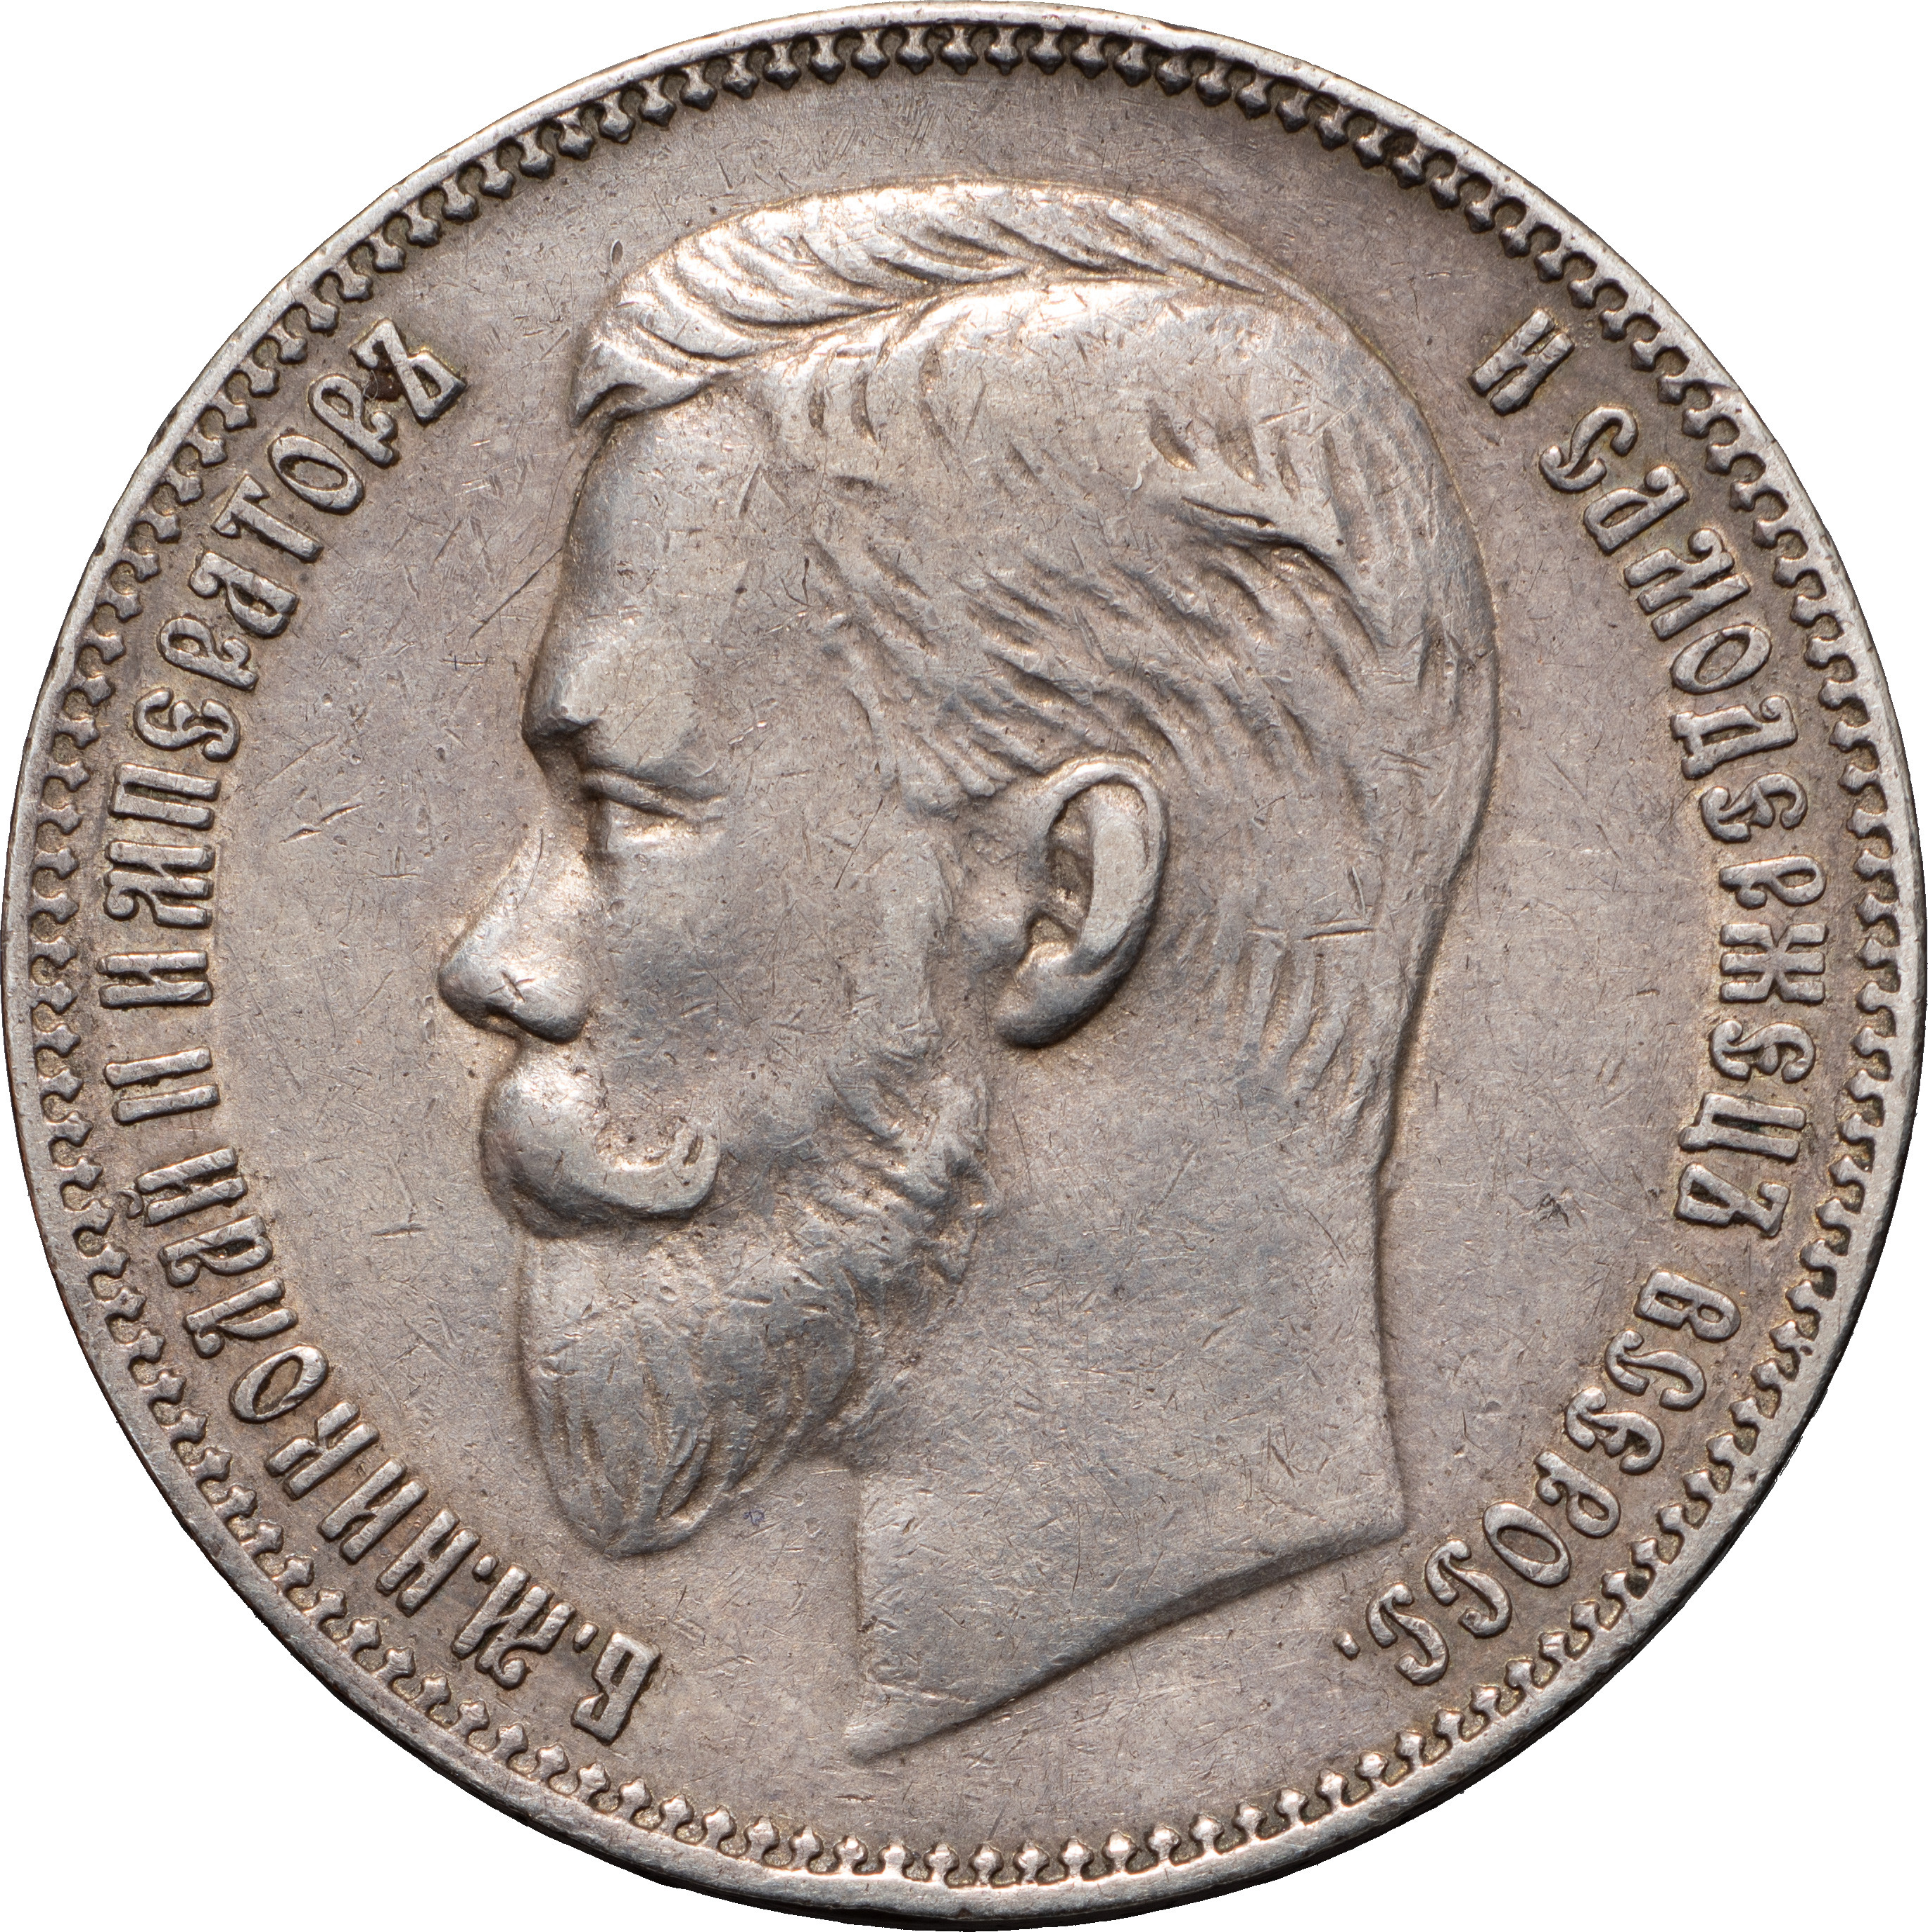 1 рубль 1902 года АР